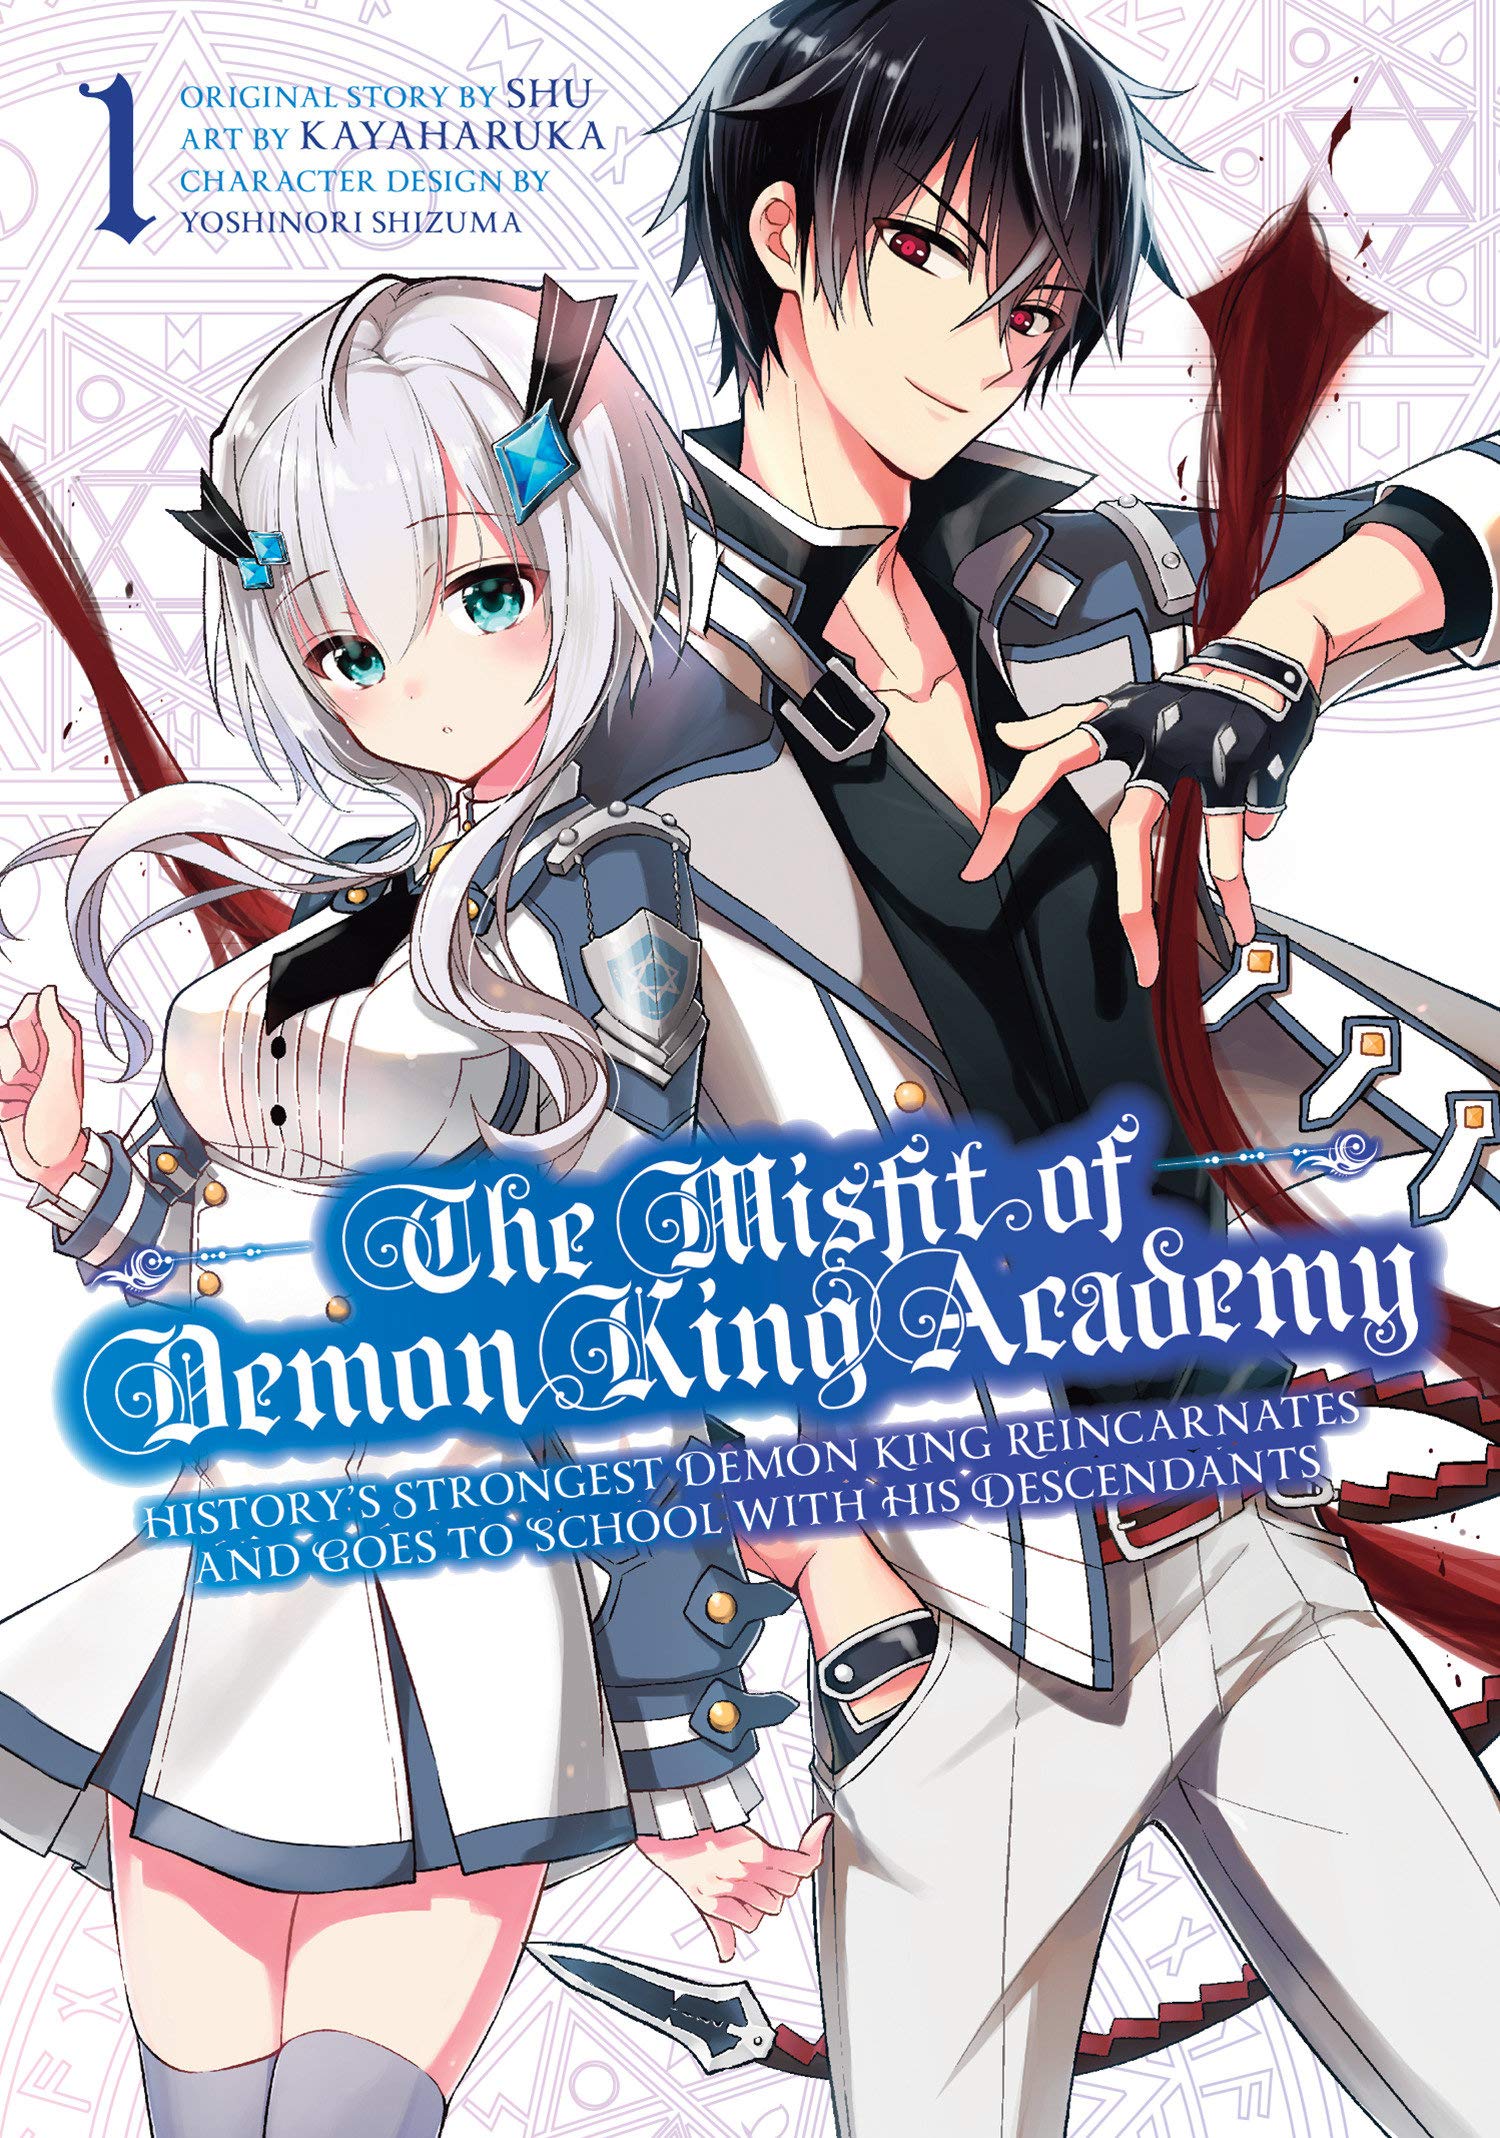 Misfit of Demon King Academy sequel teased - volume 1 ln